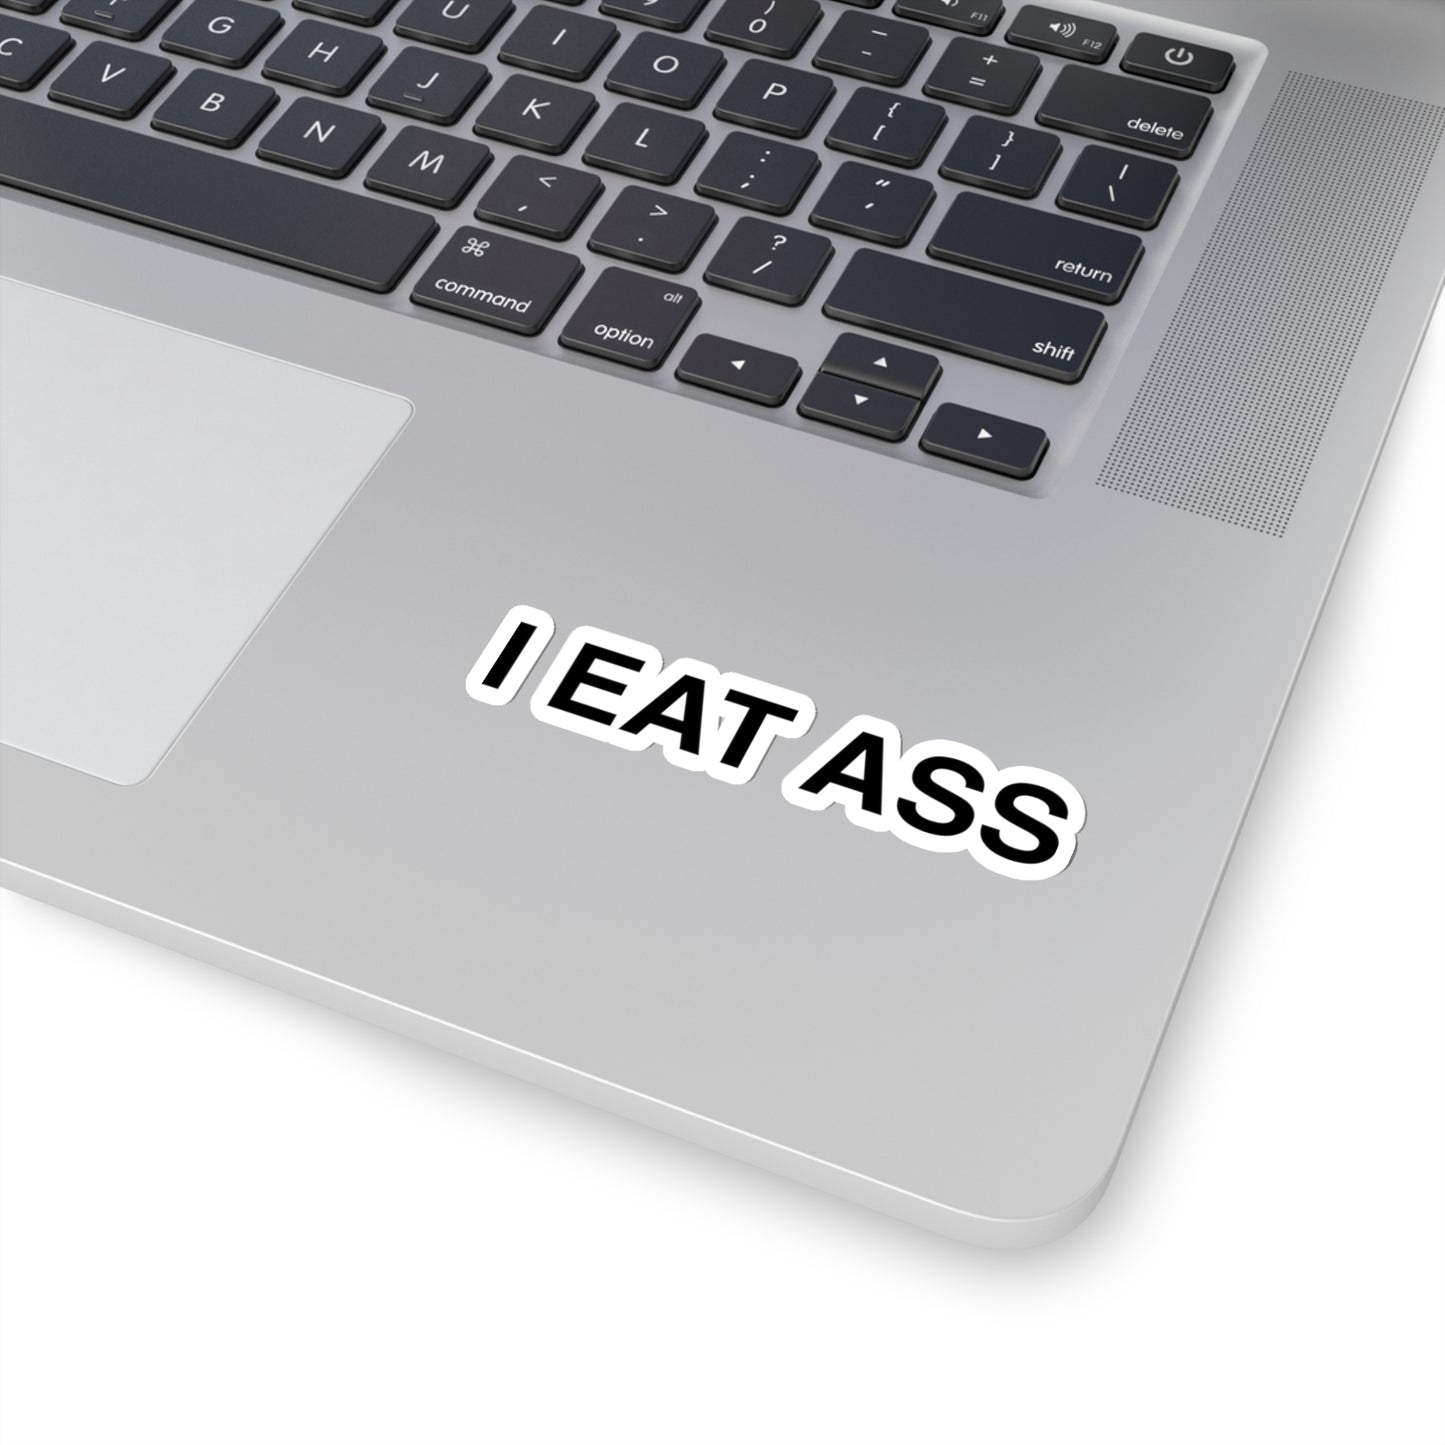 I Eat Ass, Funny Meme Sticker